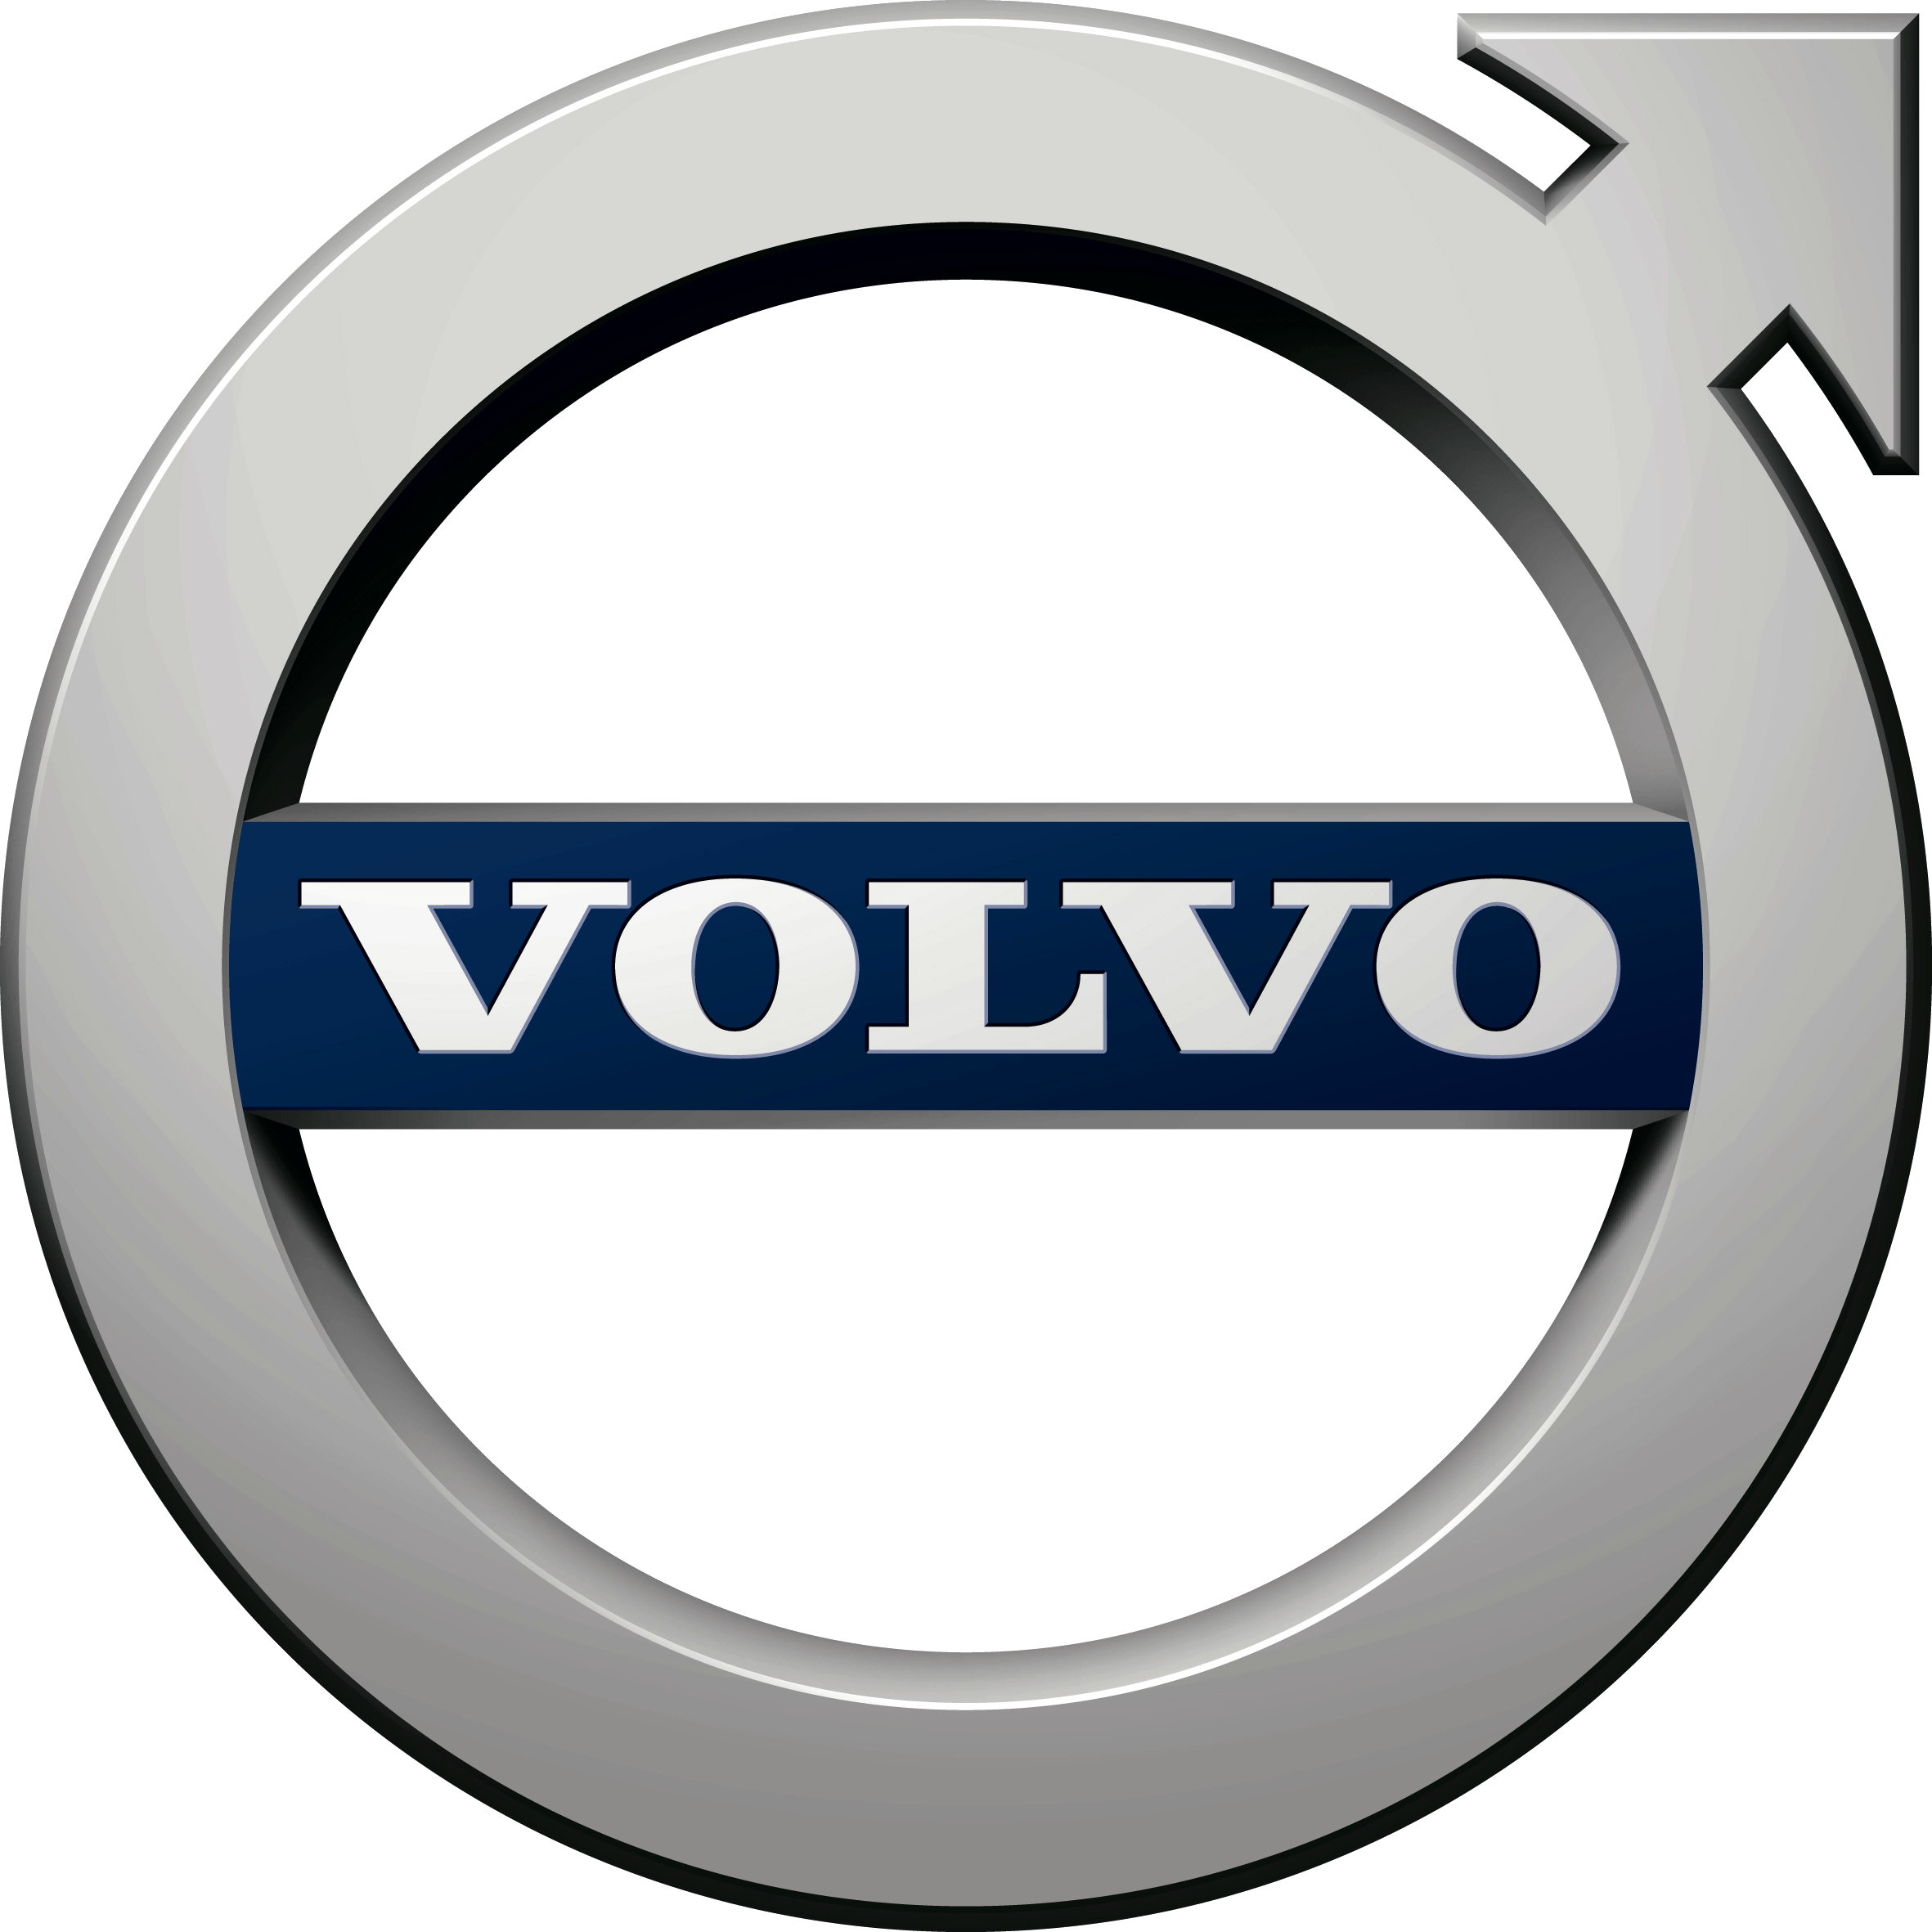 All Cars Symbols Logo - Volvo Logo, Volvo Car Symbol Meaning and History | Car Brand Names.com